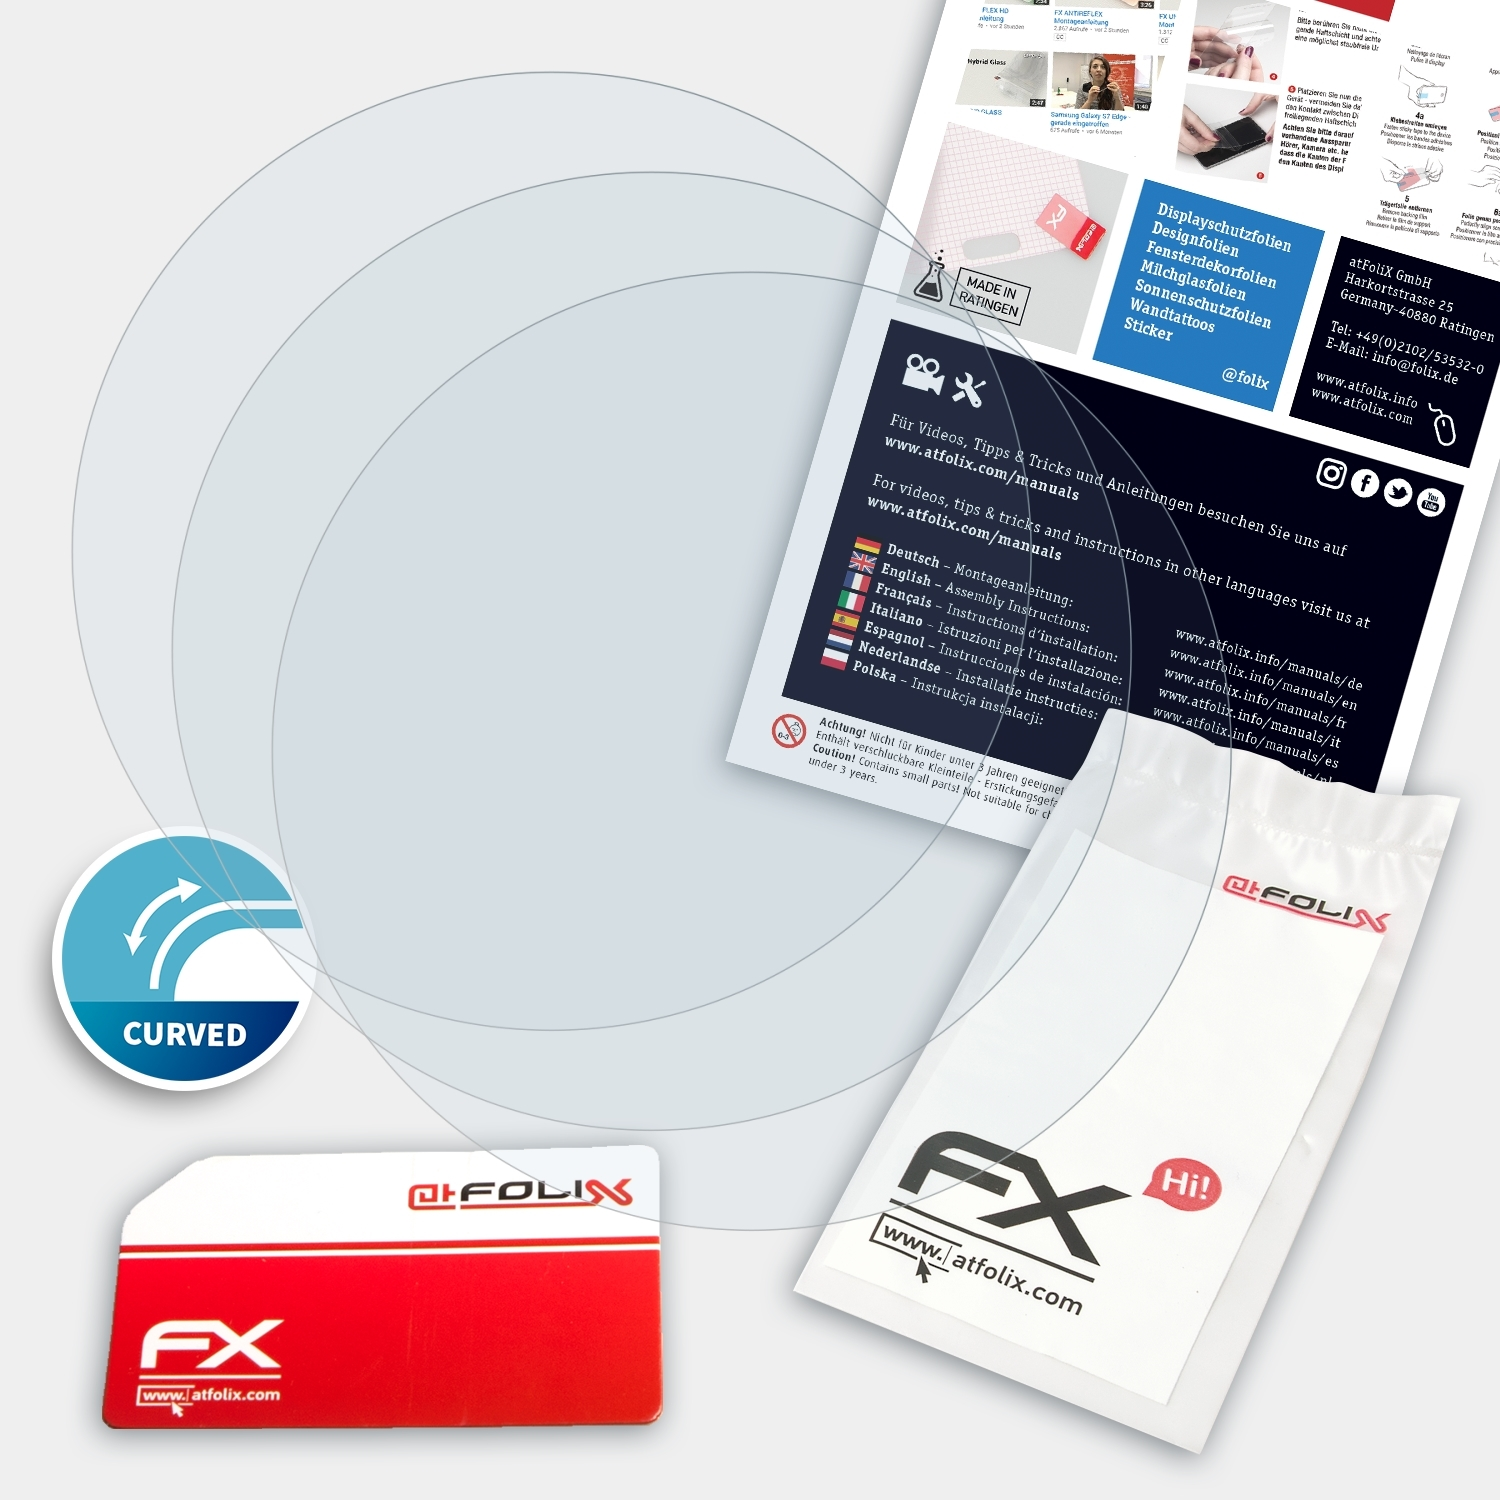 ATFOLIX 3x FX-ActiFleX Displayschutz(für CR1) Doogee